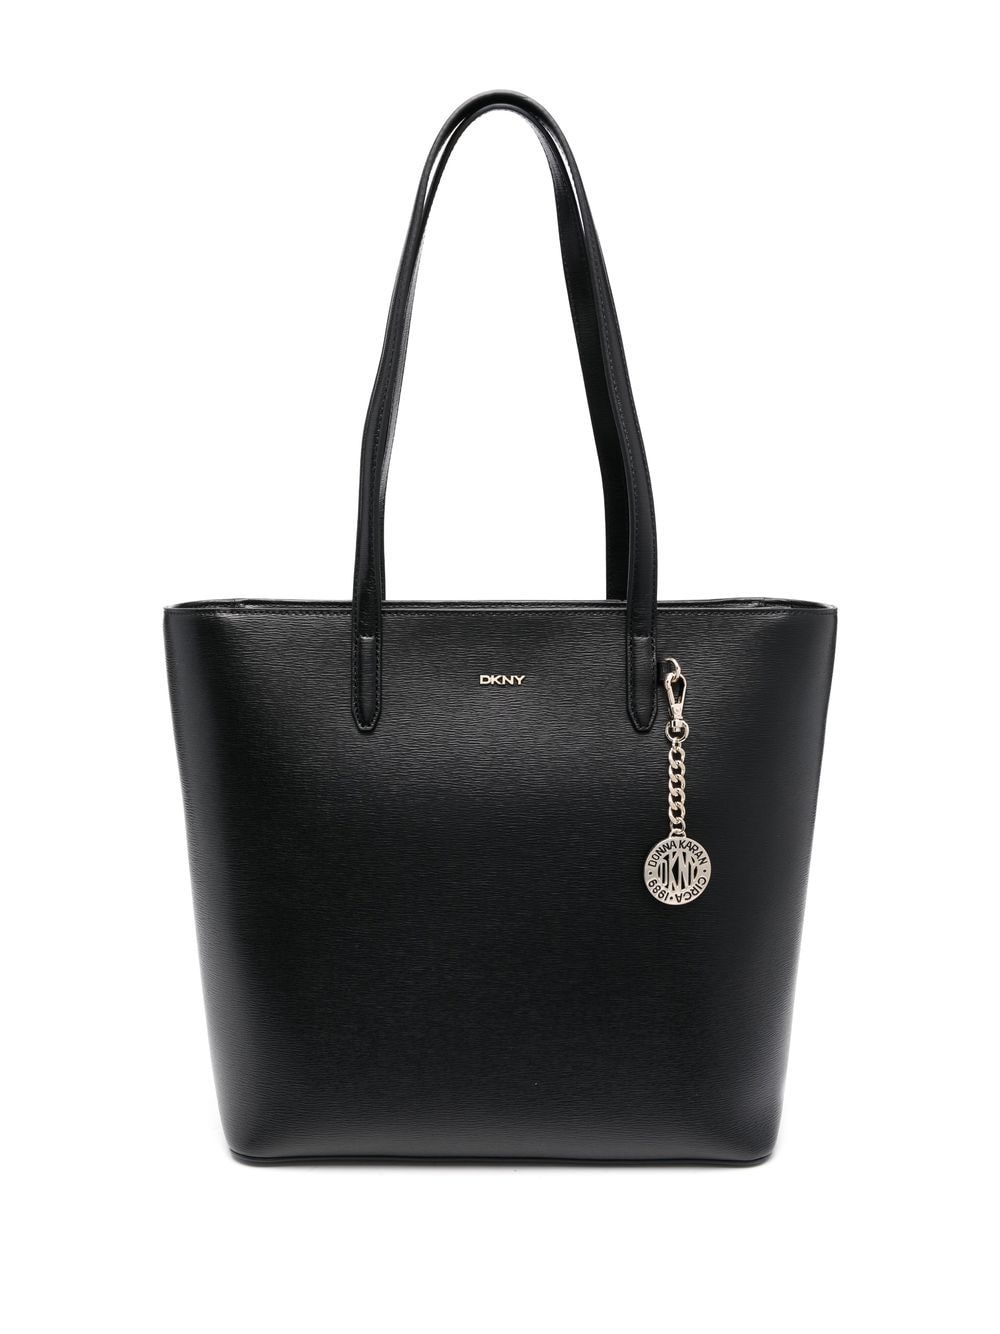 DKNY Bryant leather tote bag - Black von DKNY